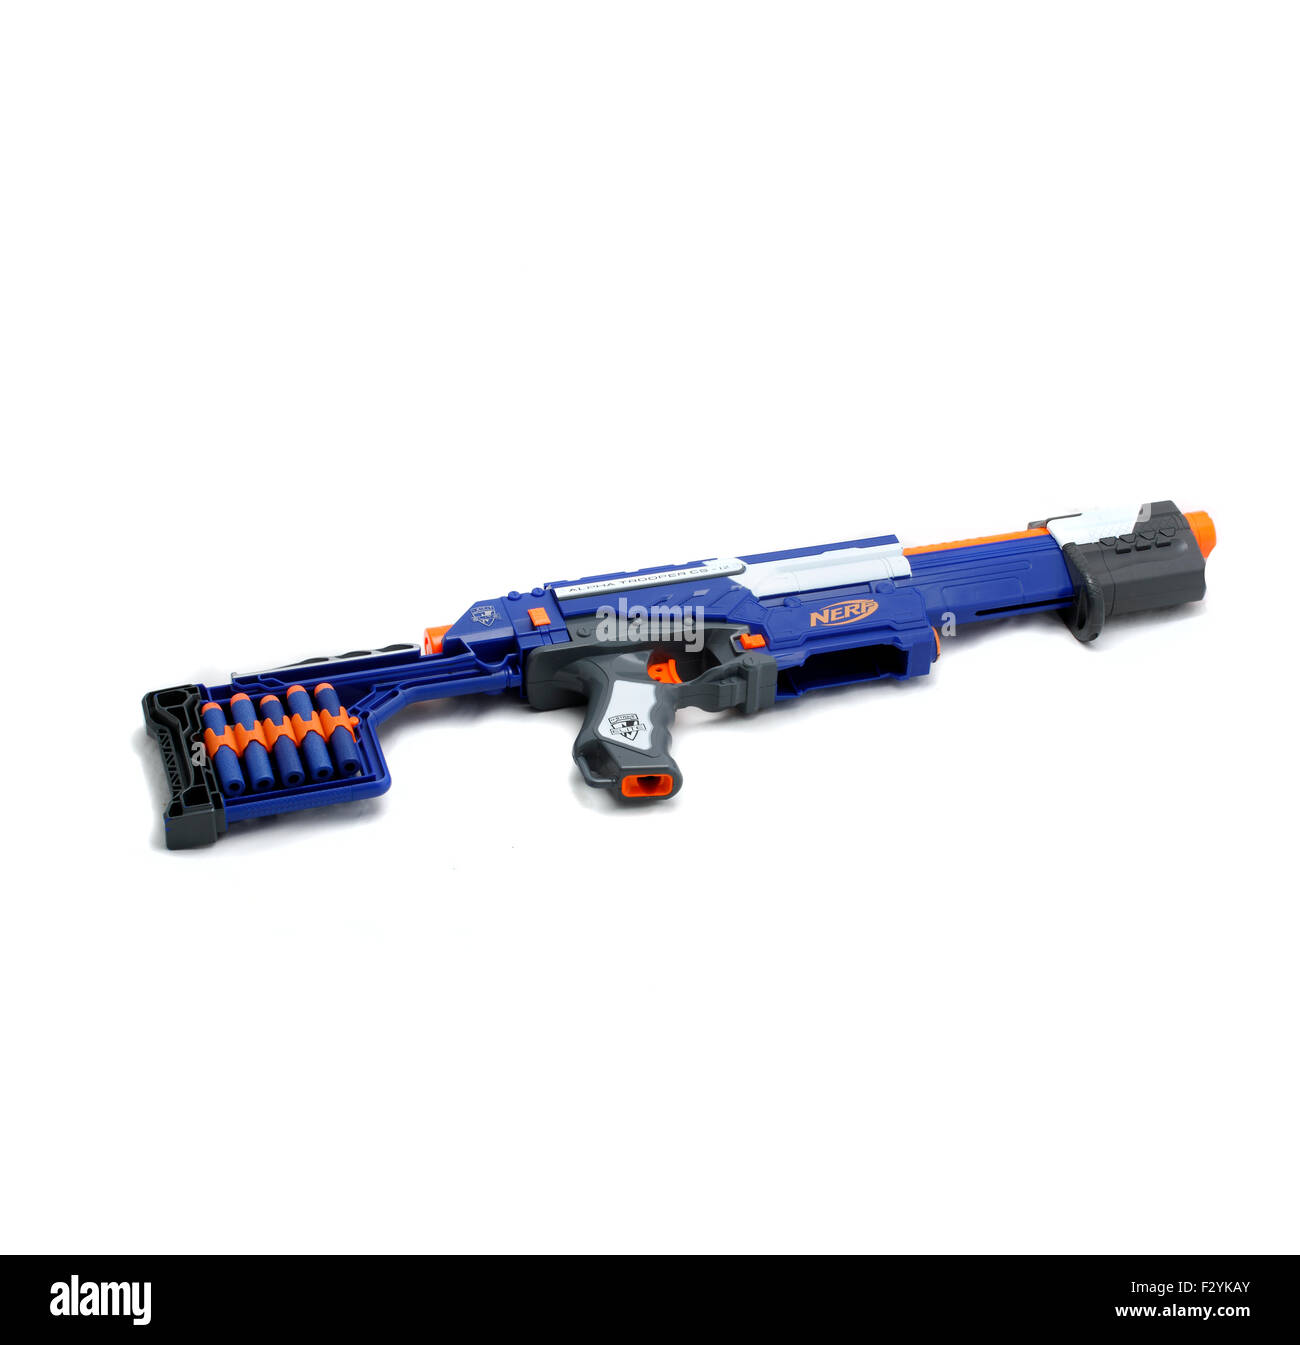 Fotos de Nerf gun, Imagens de Nerf gun sem royalties